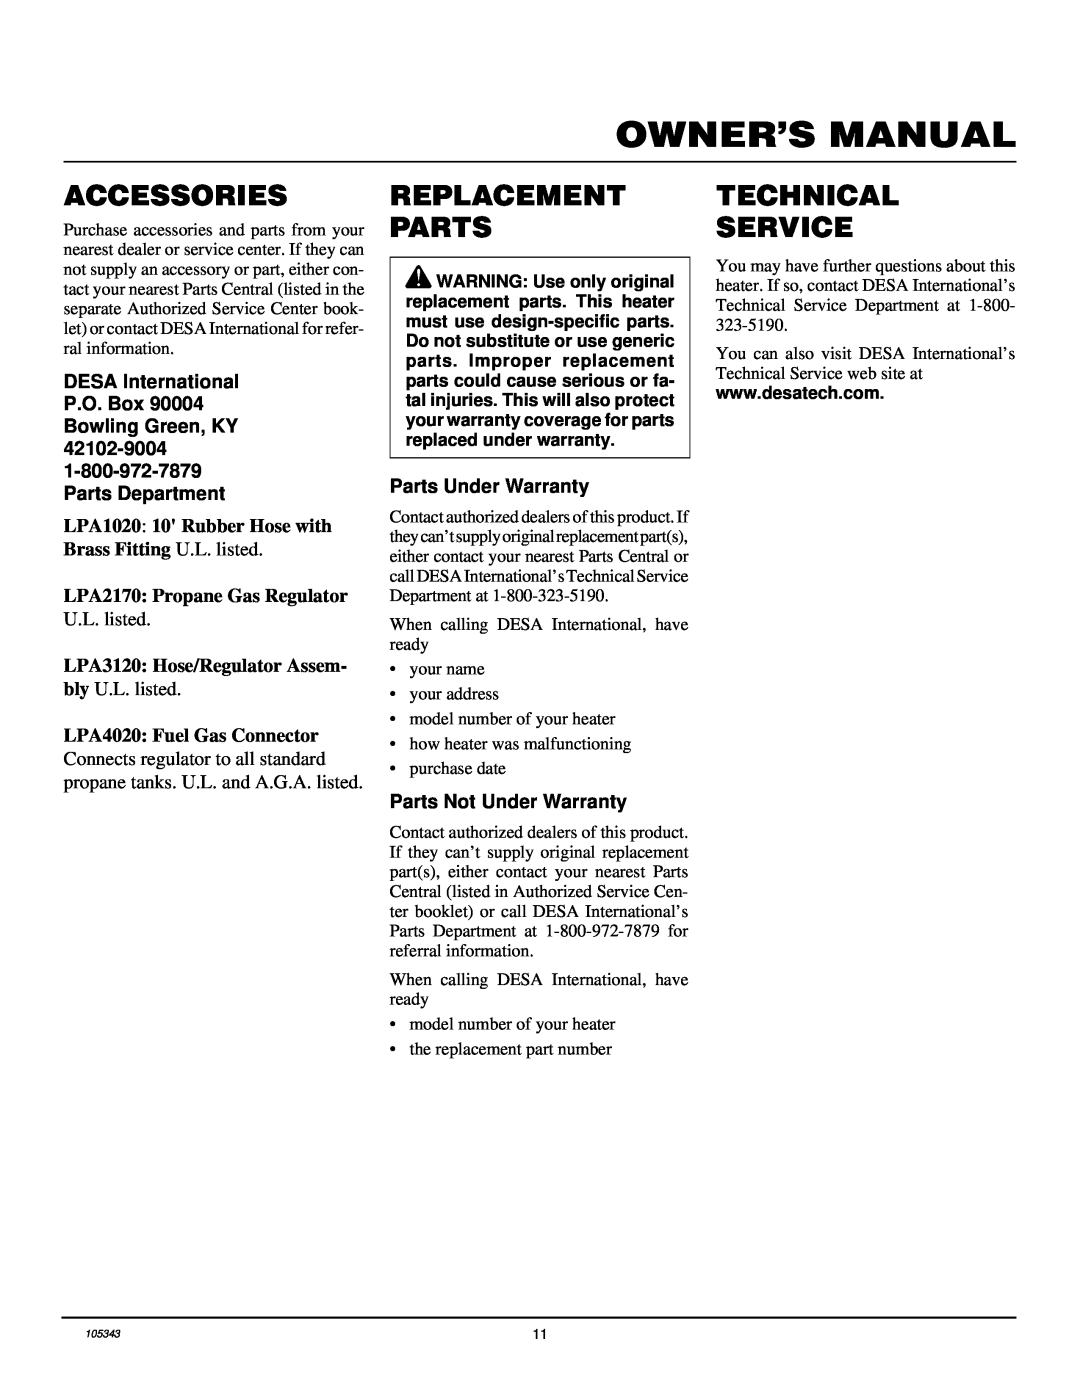 Desa RM30LP owner manual Accessories, Replacement Parts, Technical Service, LPA2170 Propane Gas Regulator, U.L. listed 